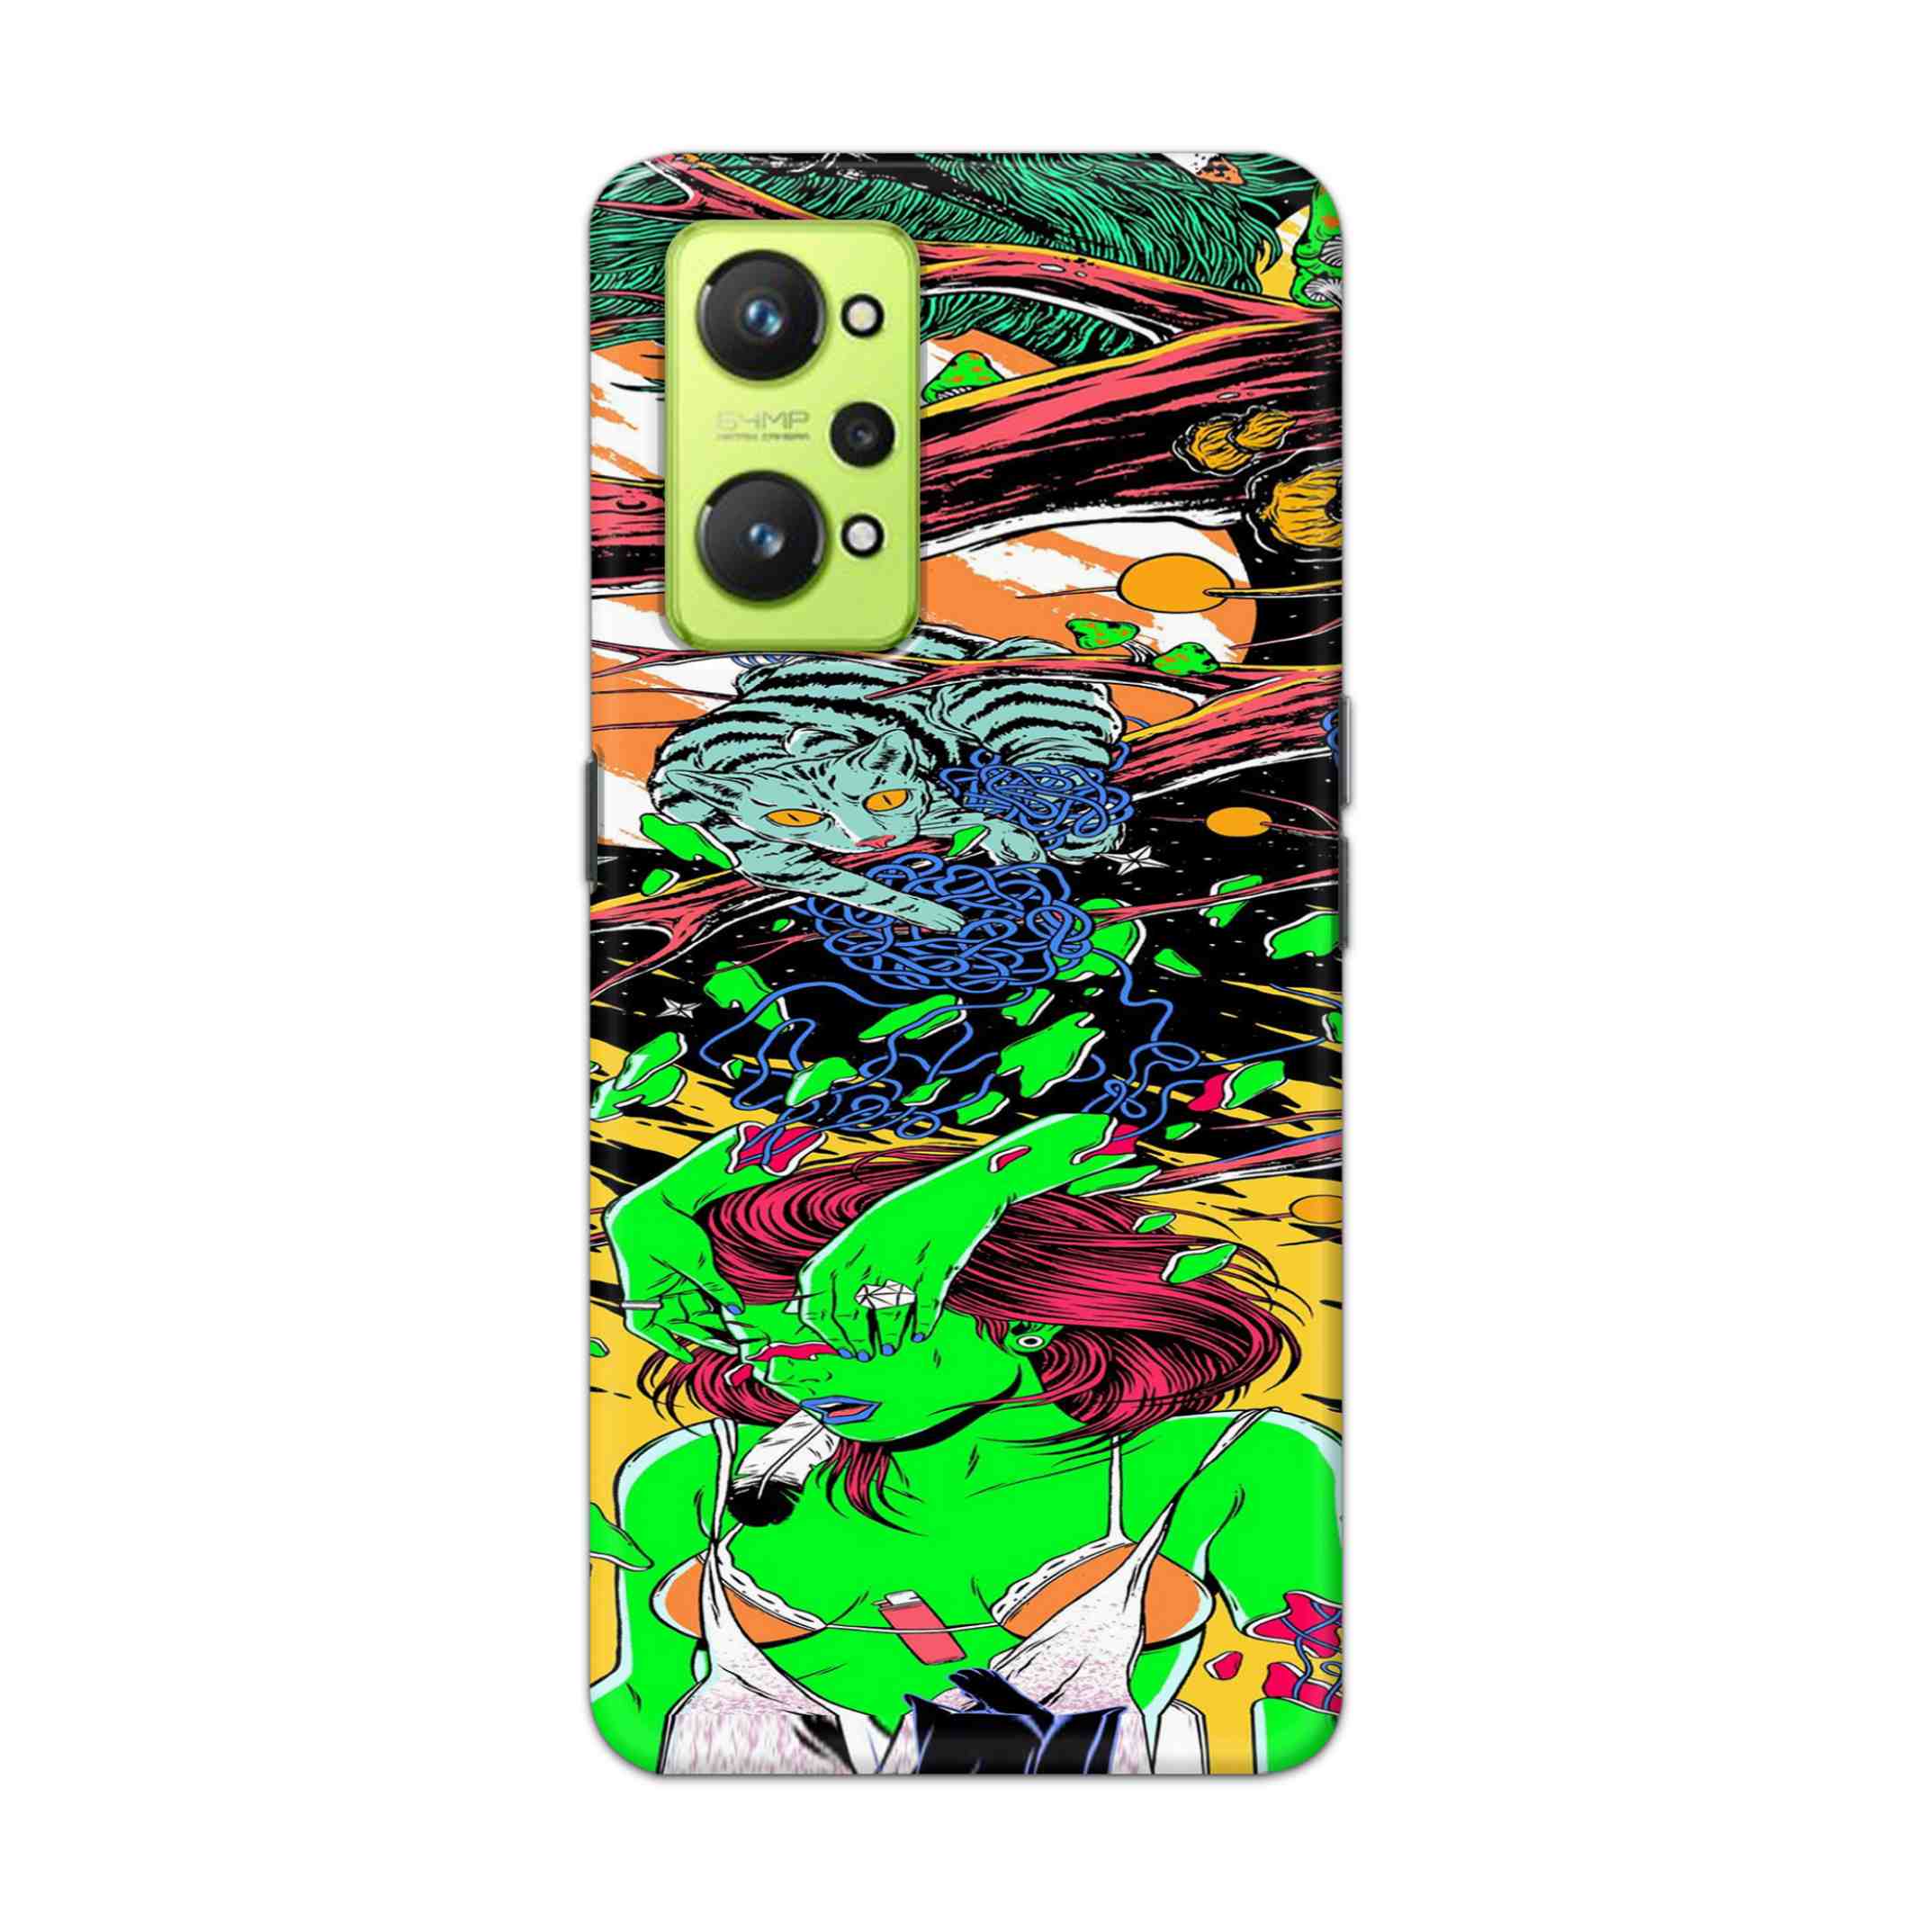 Buy Green Girl Art Hard Back Mobile Phone Case Cover For Realme GT Neo2 Online